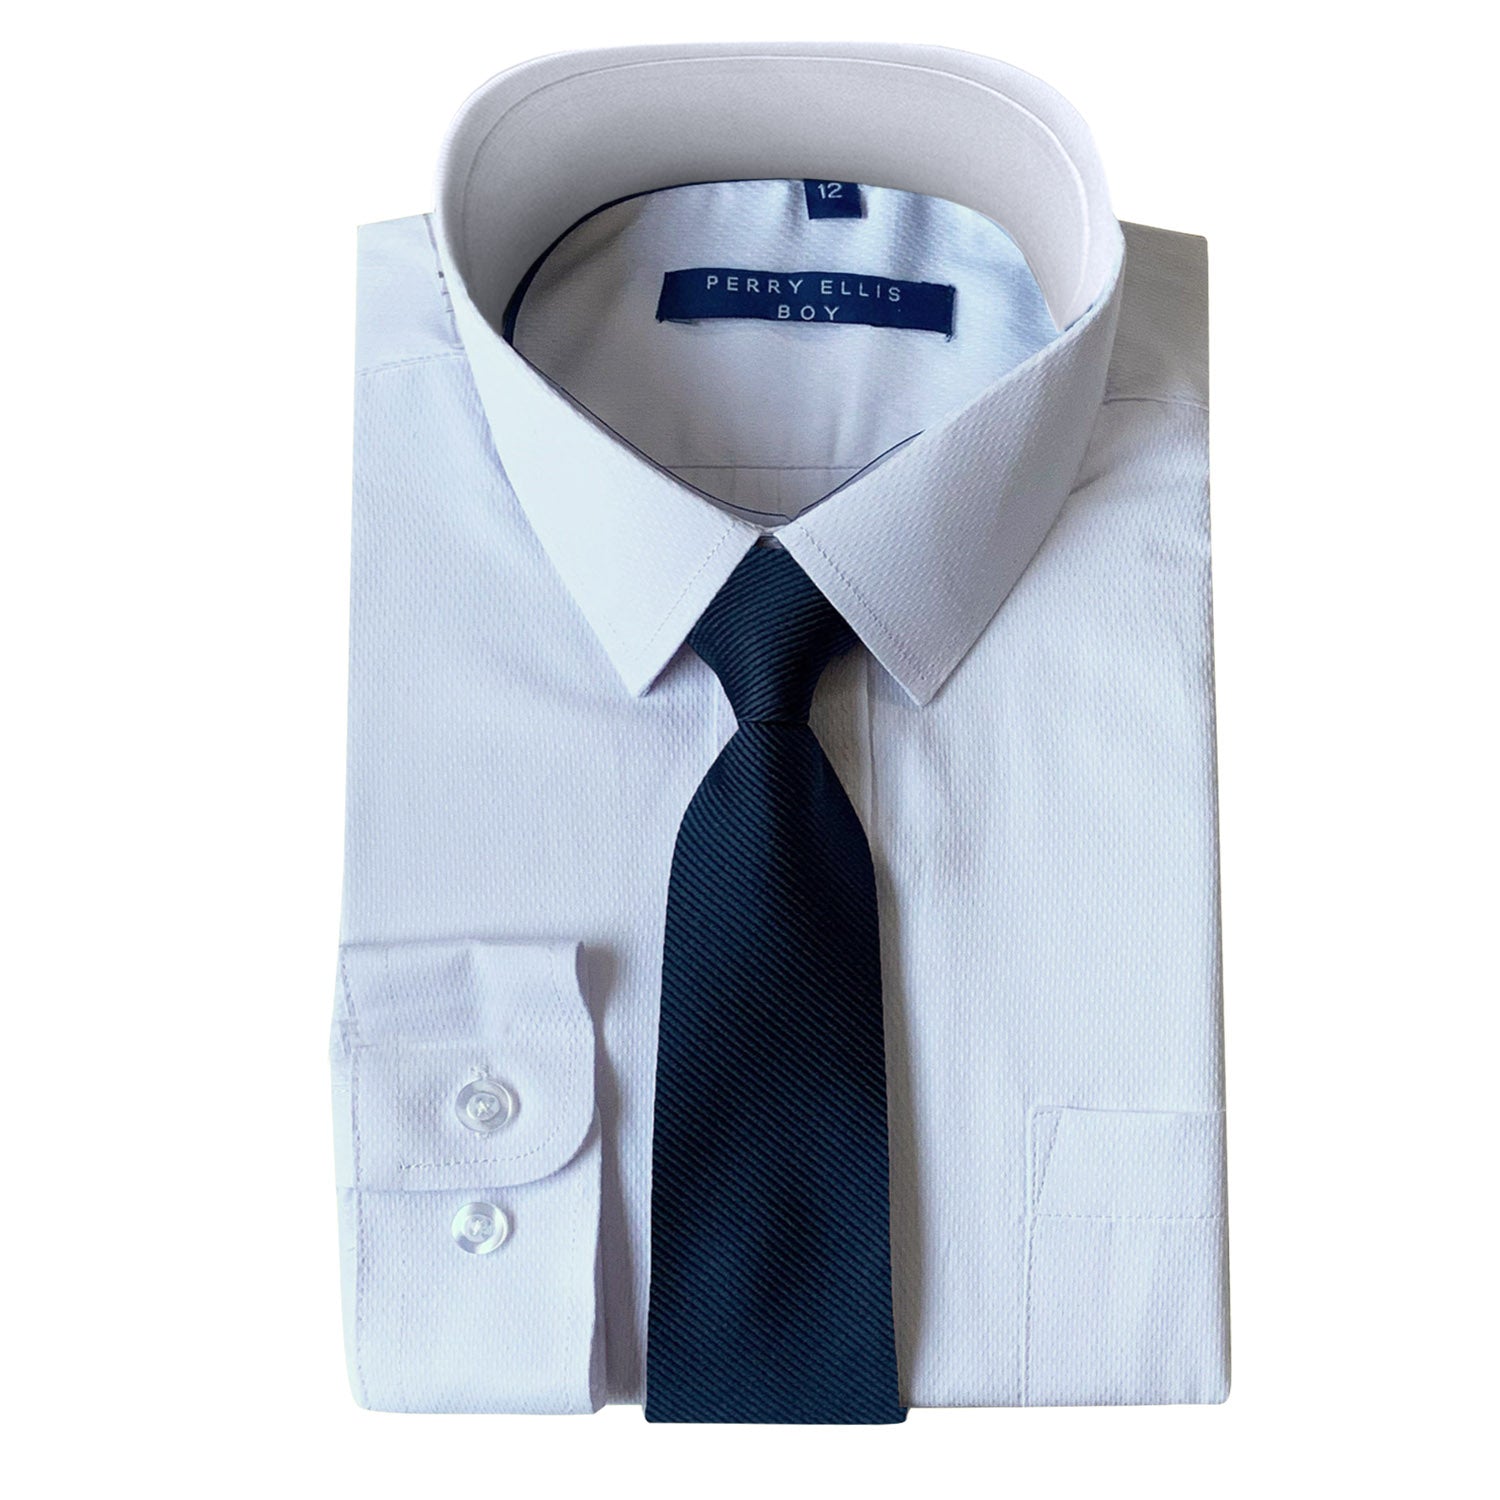 Perry Ellis Boys Dress Shirts w Indigo Tie Solid Shirts w Colored Tie